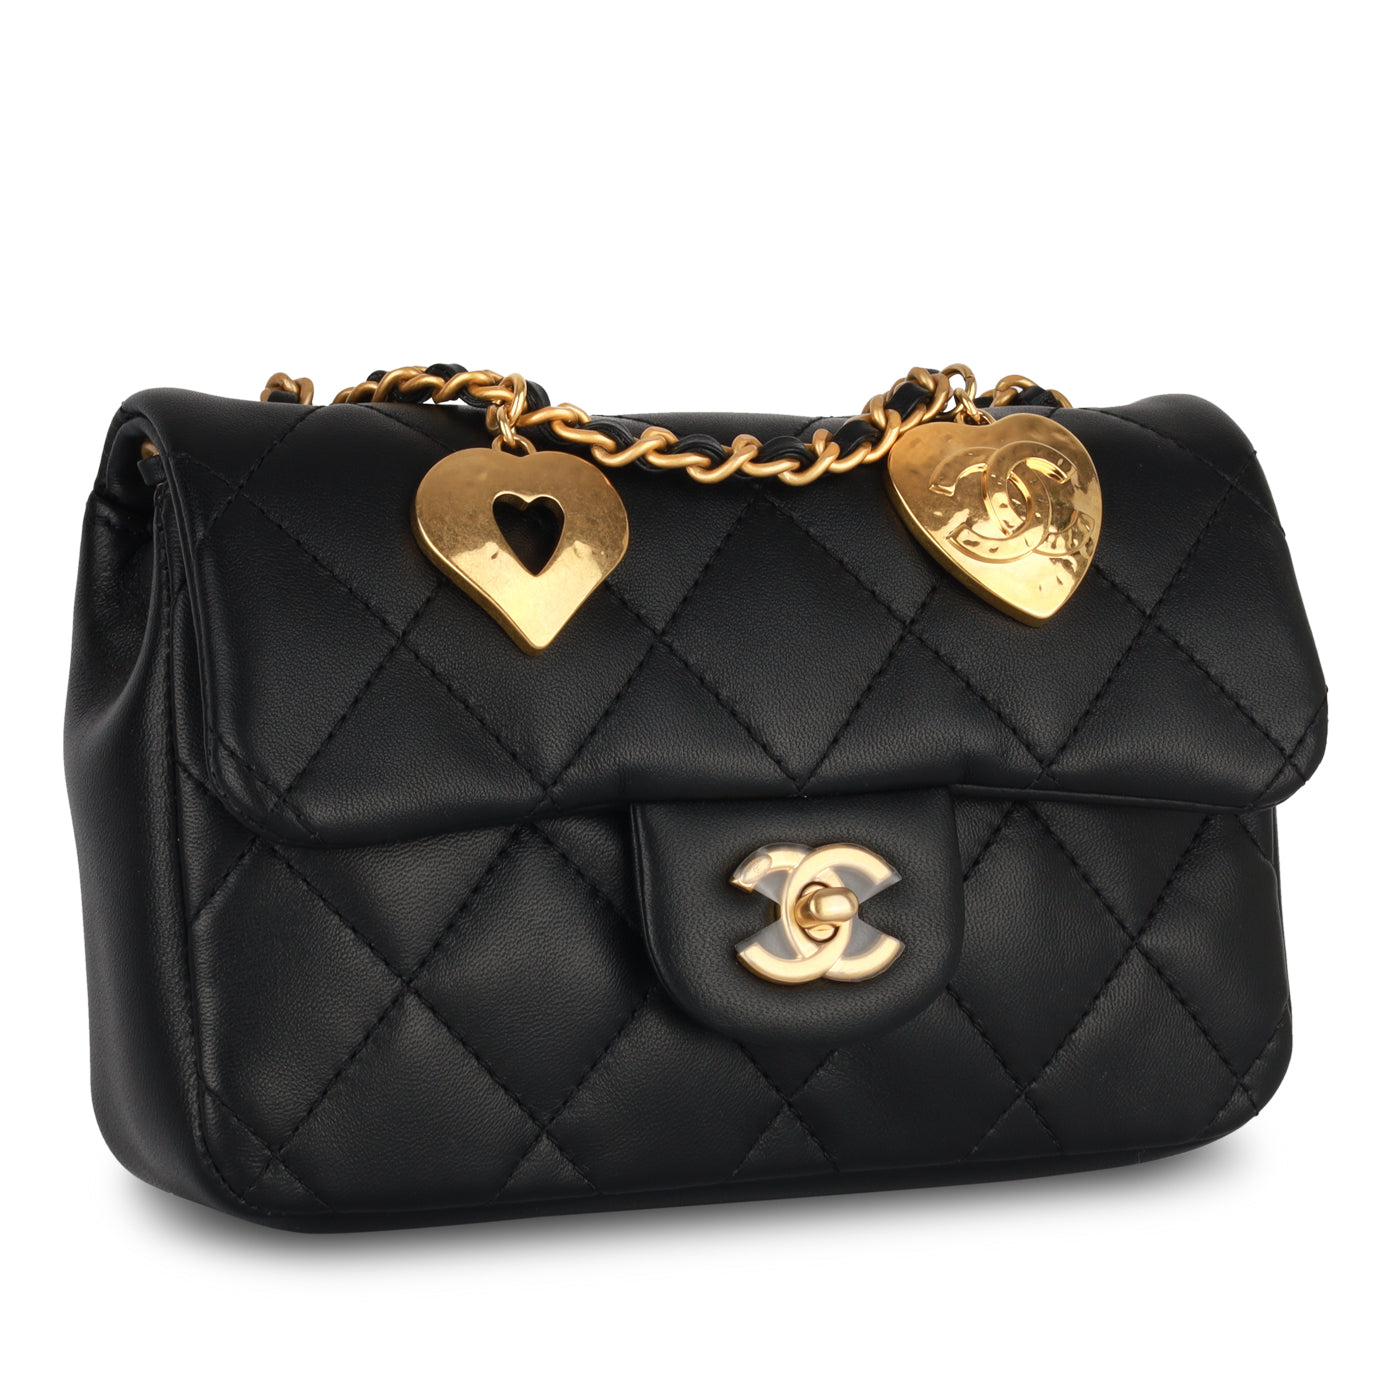 Pre-order New Chanel Heart bag small size139,950 baht. ออกshop France  อุปกรณ์ครบ พร้อมใบเสร็จ#chaneltrifoldwalletthailand…